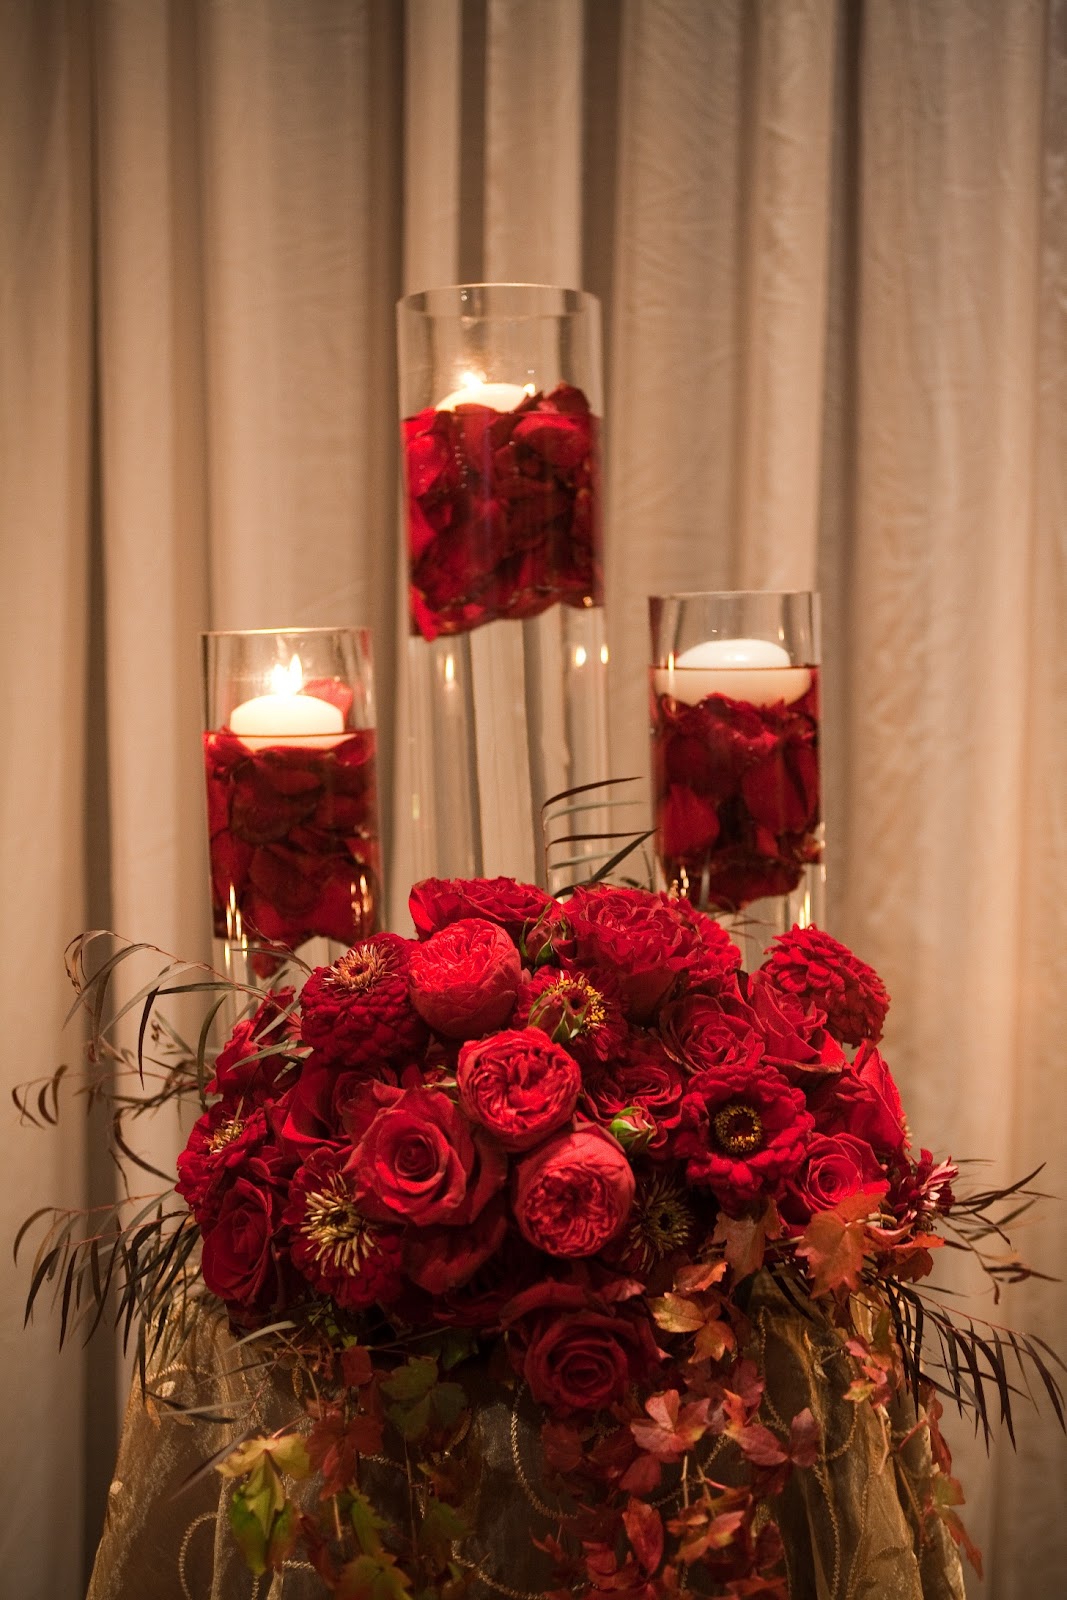 Flora Nova Design - The Blog: A Fall Wedding in Deep Red